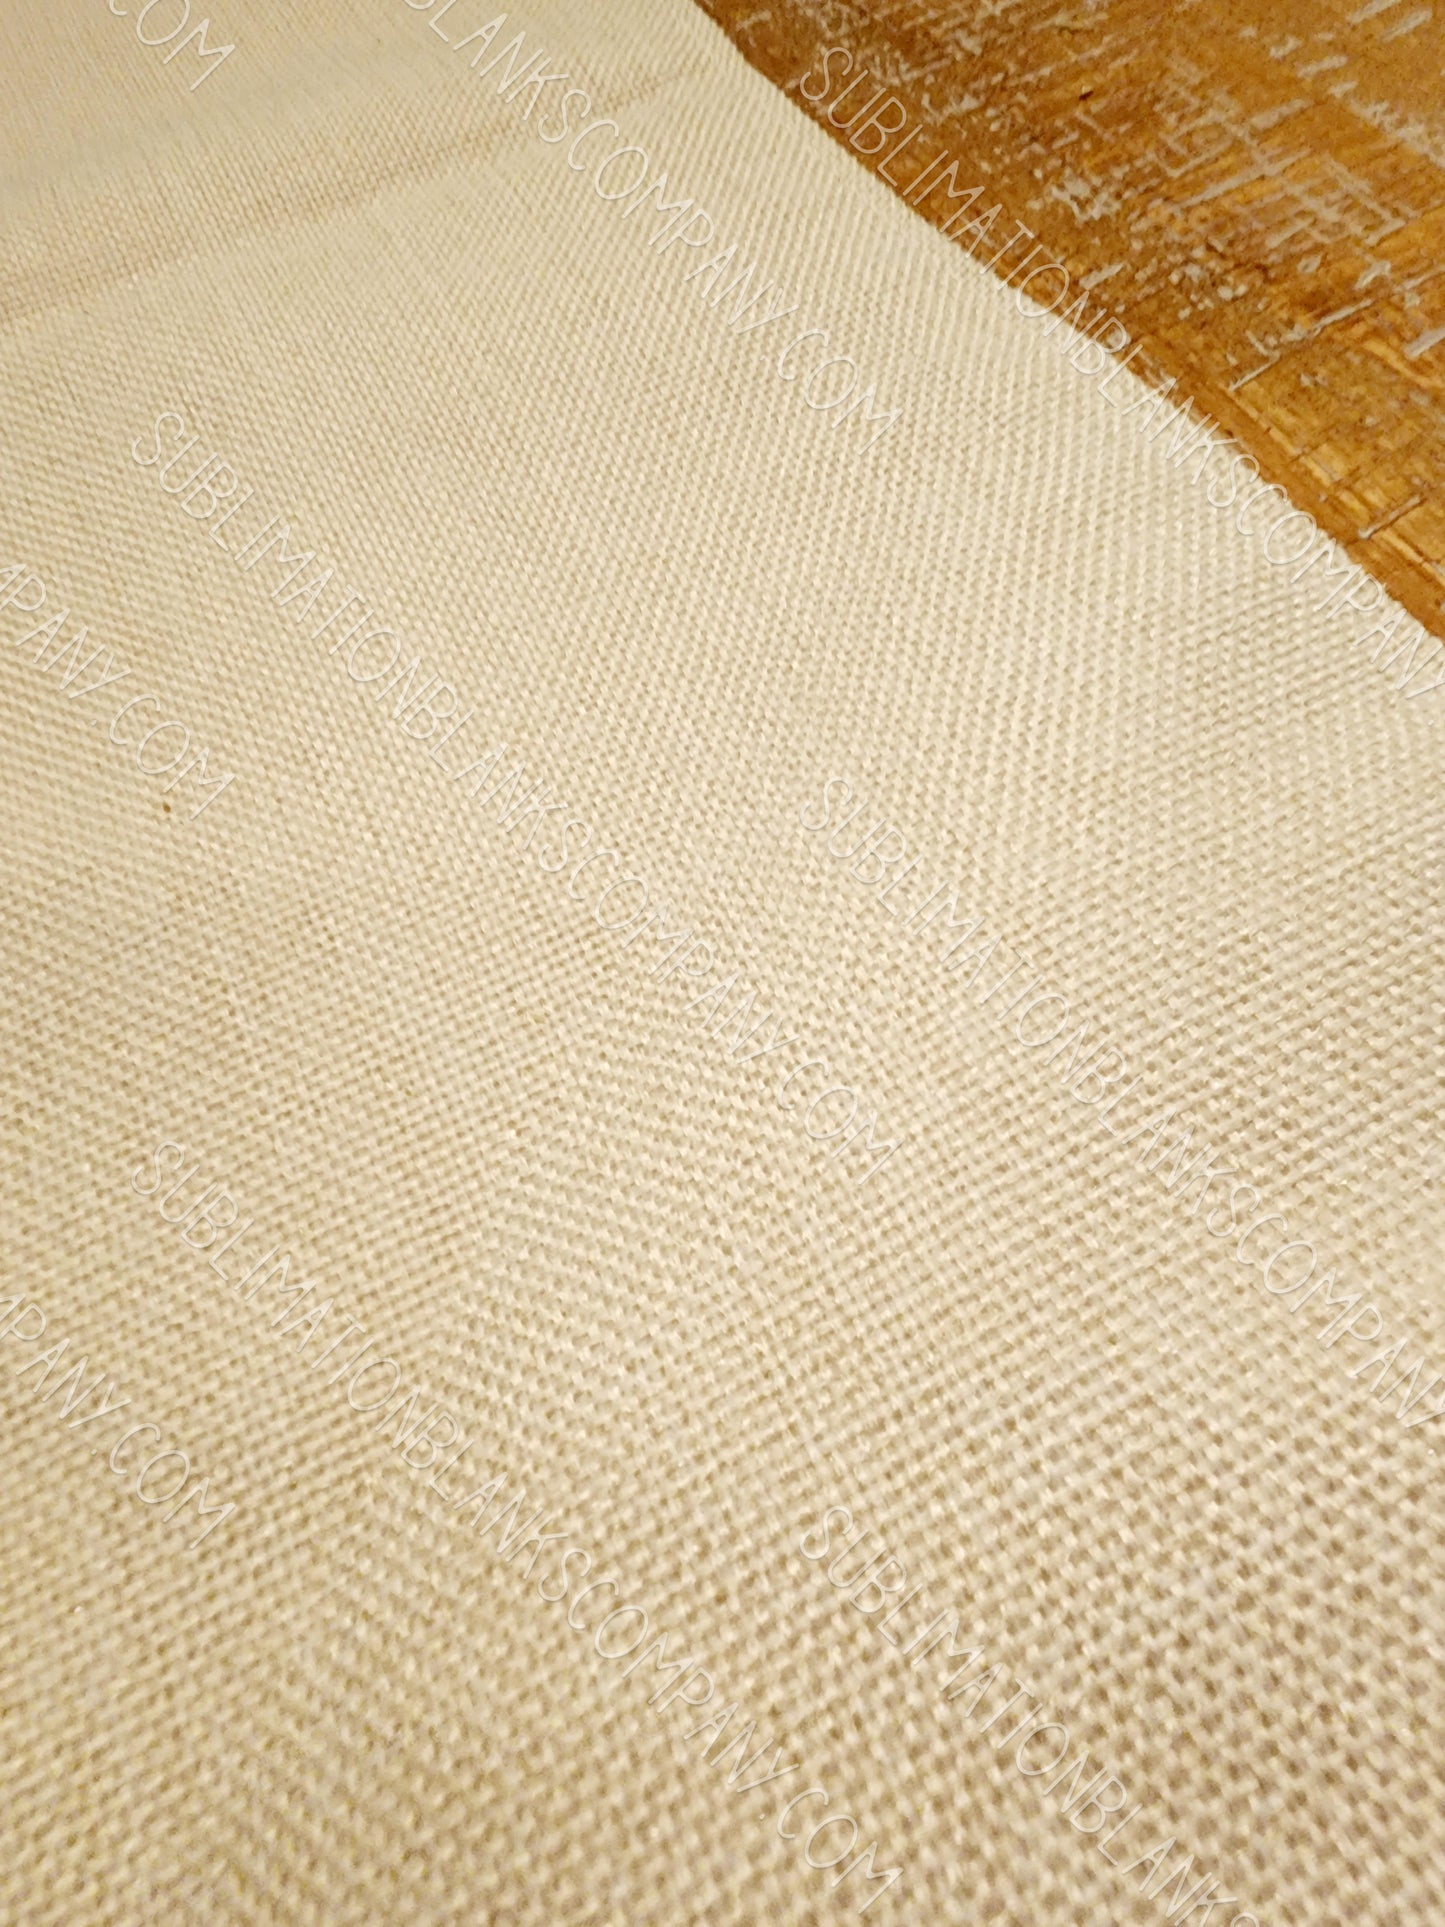 2-sided Farmhouse Burlap Linen Table Runner Sublimation Blank with Tassel Trim!